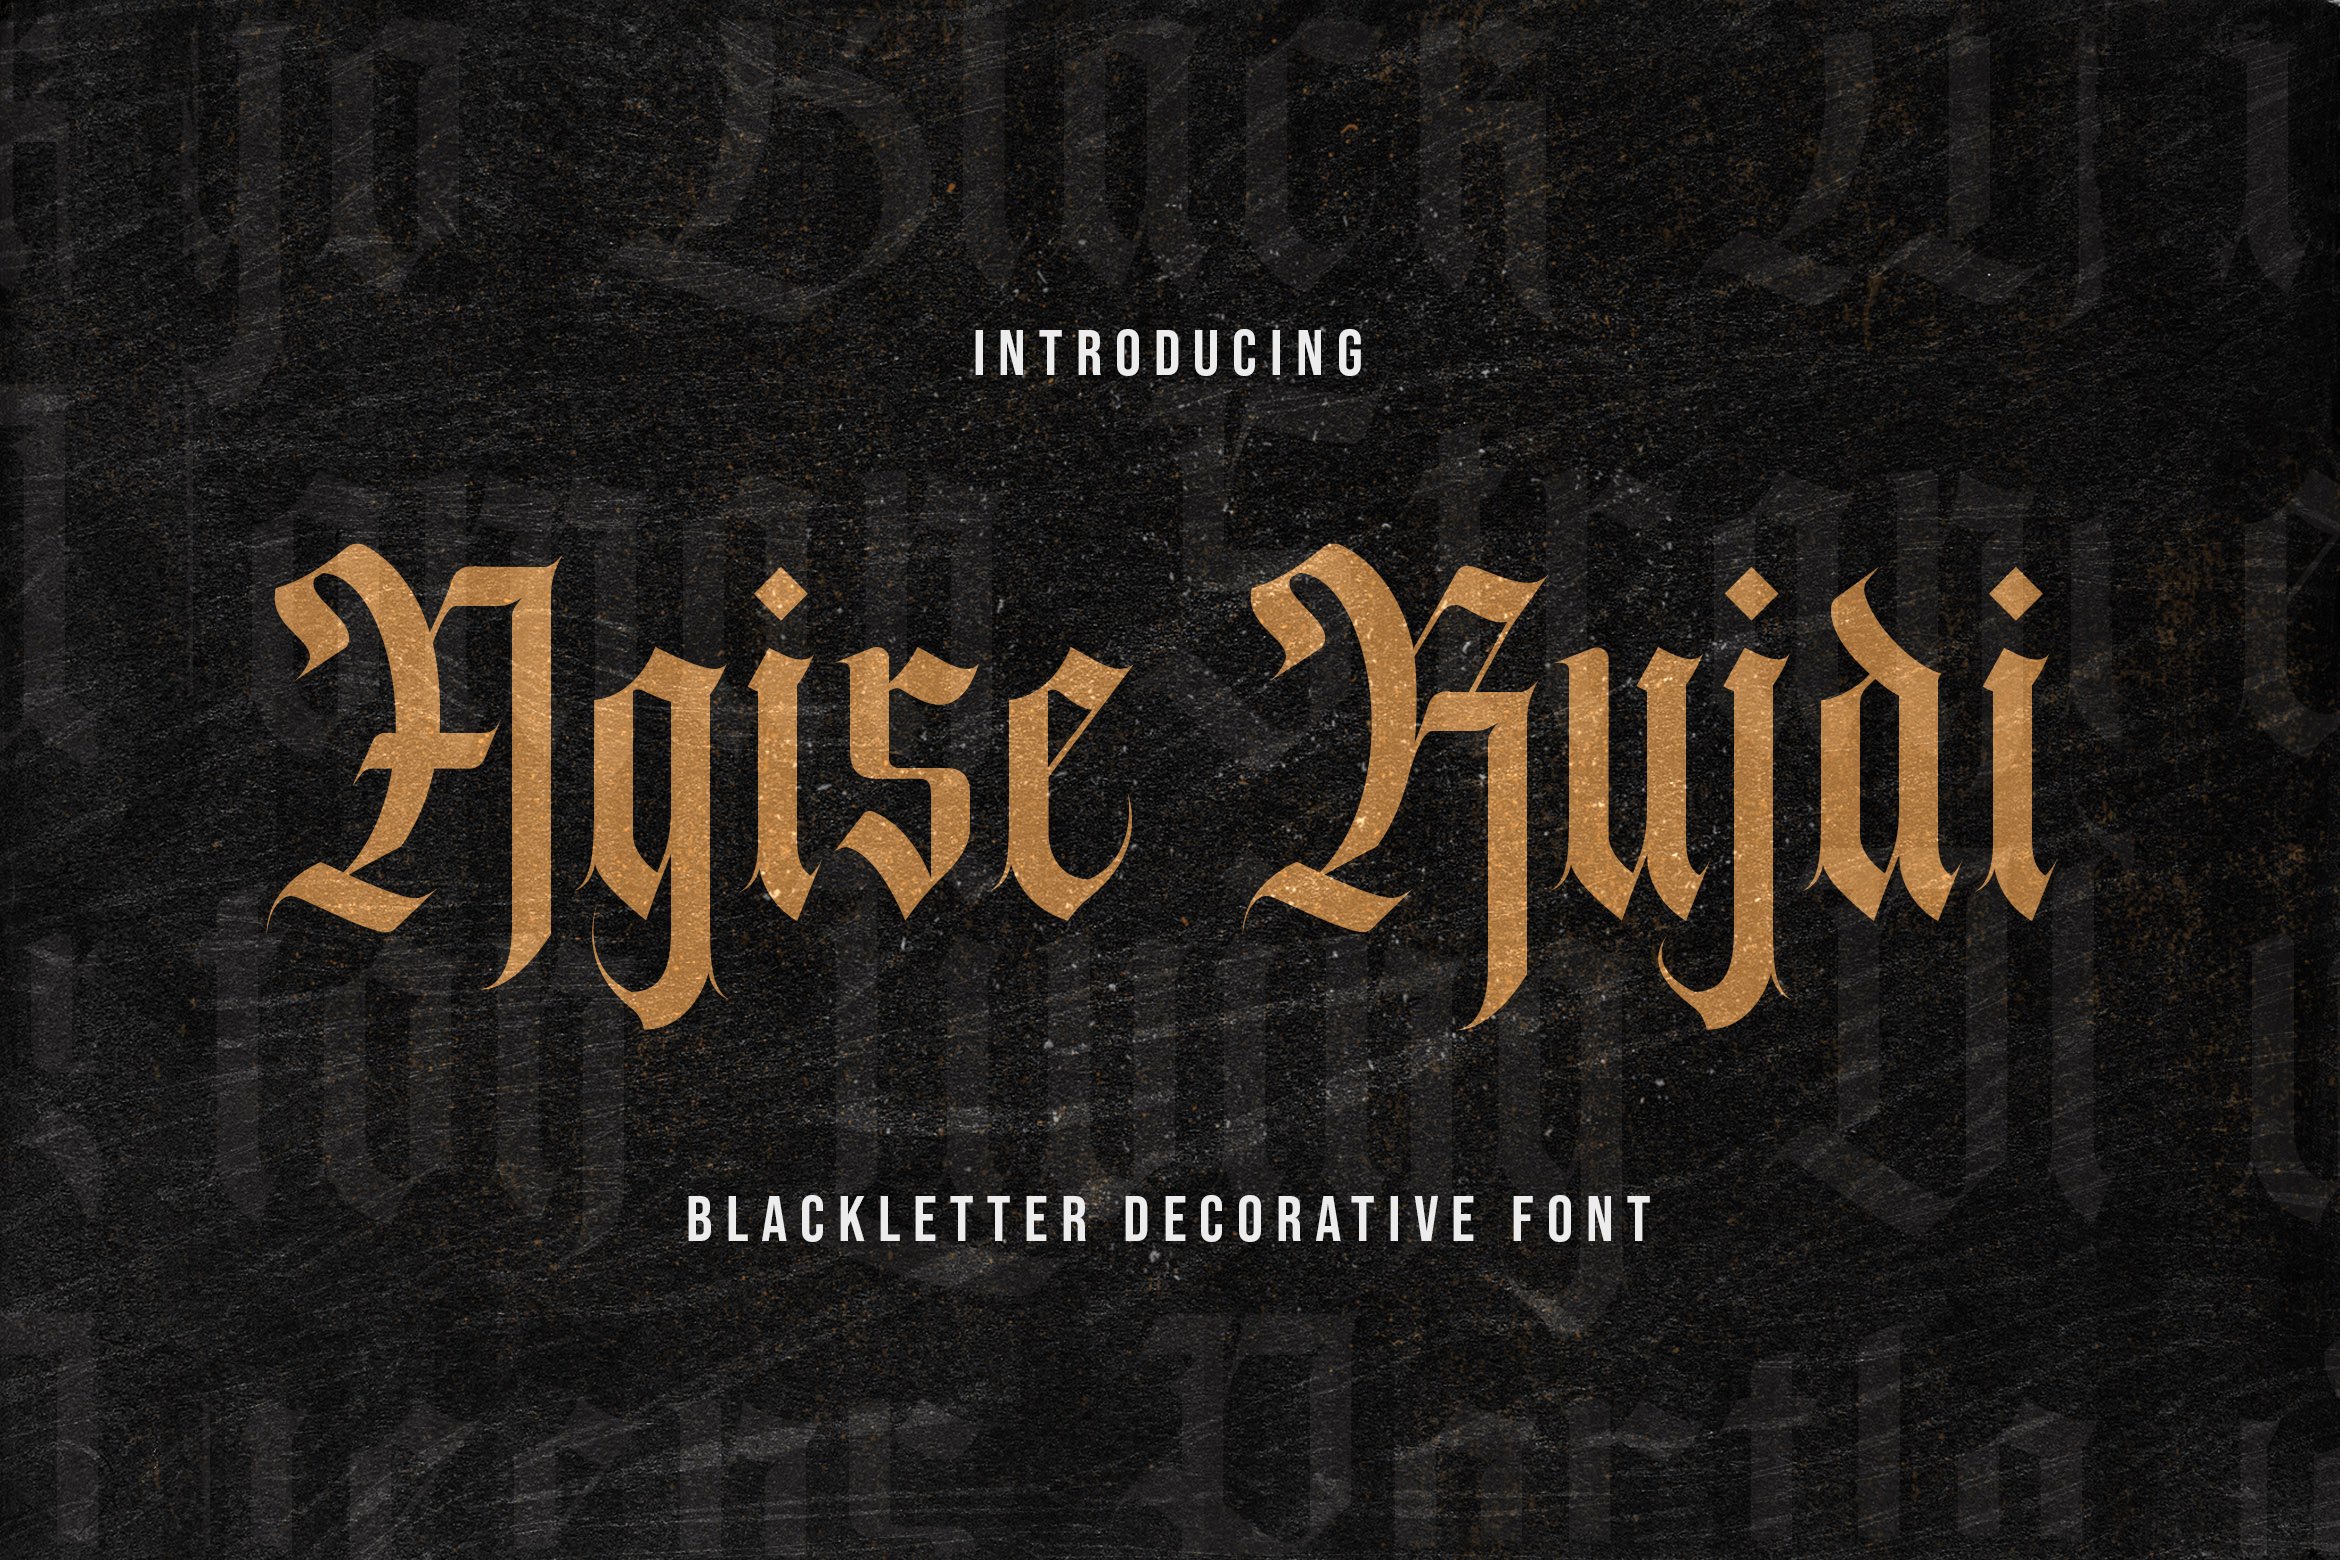 Agise Rujdi - Blackletter Font cover image.